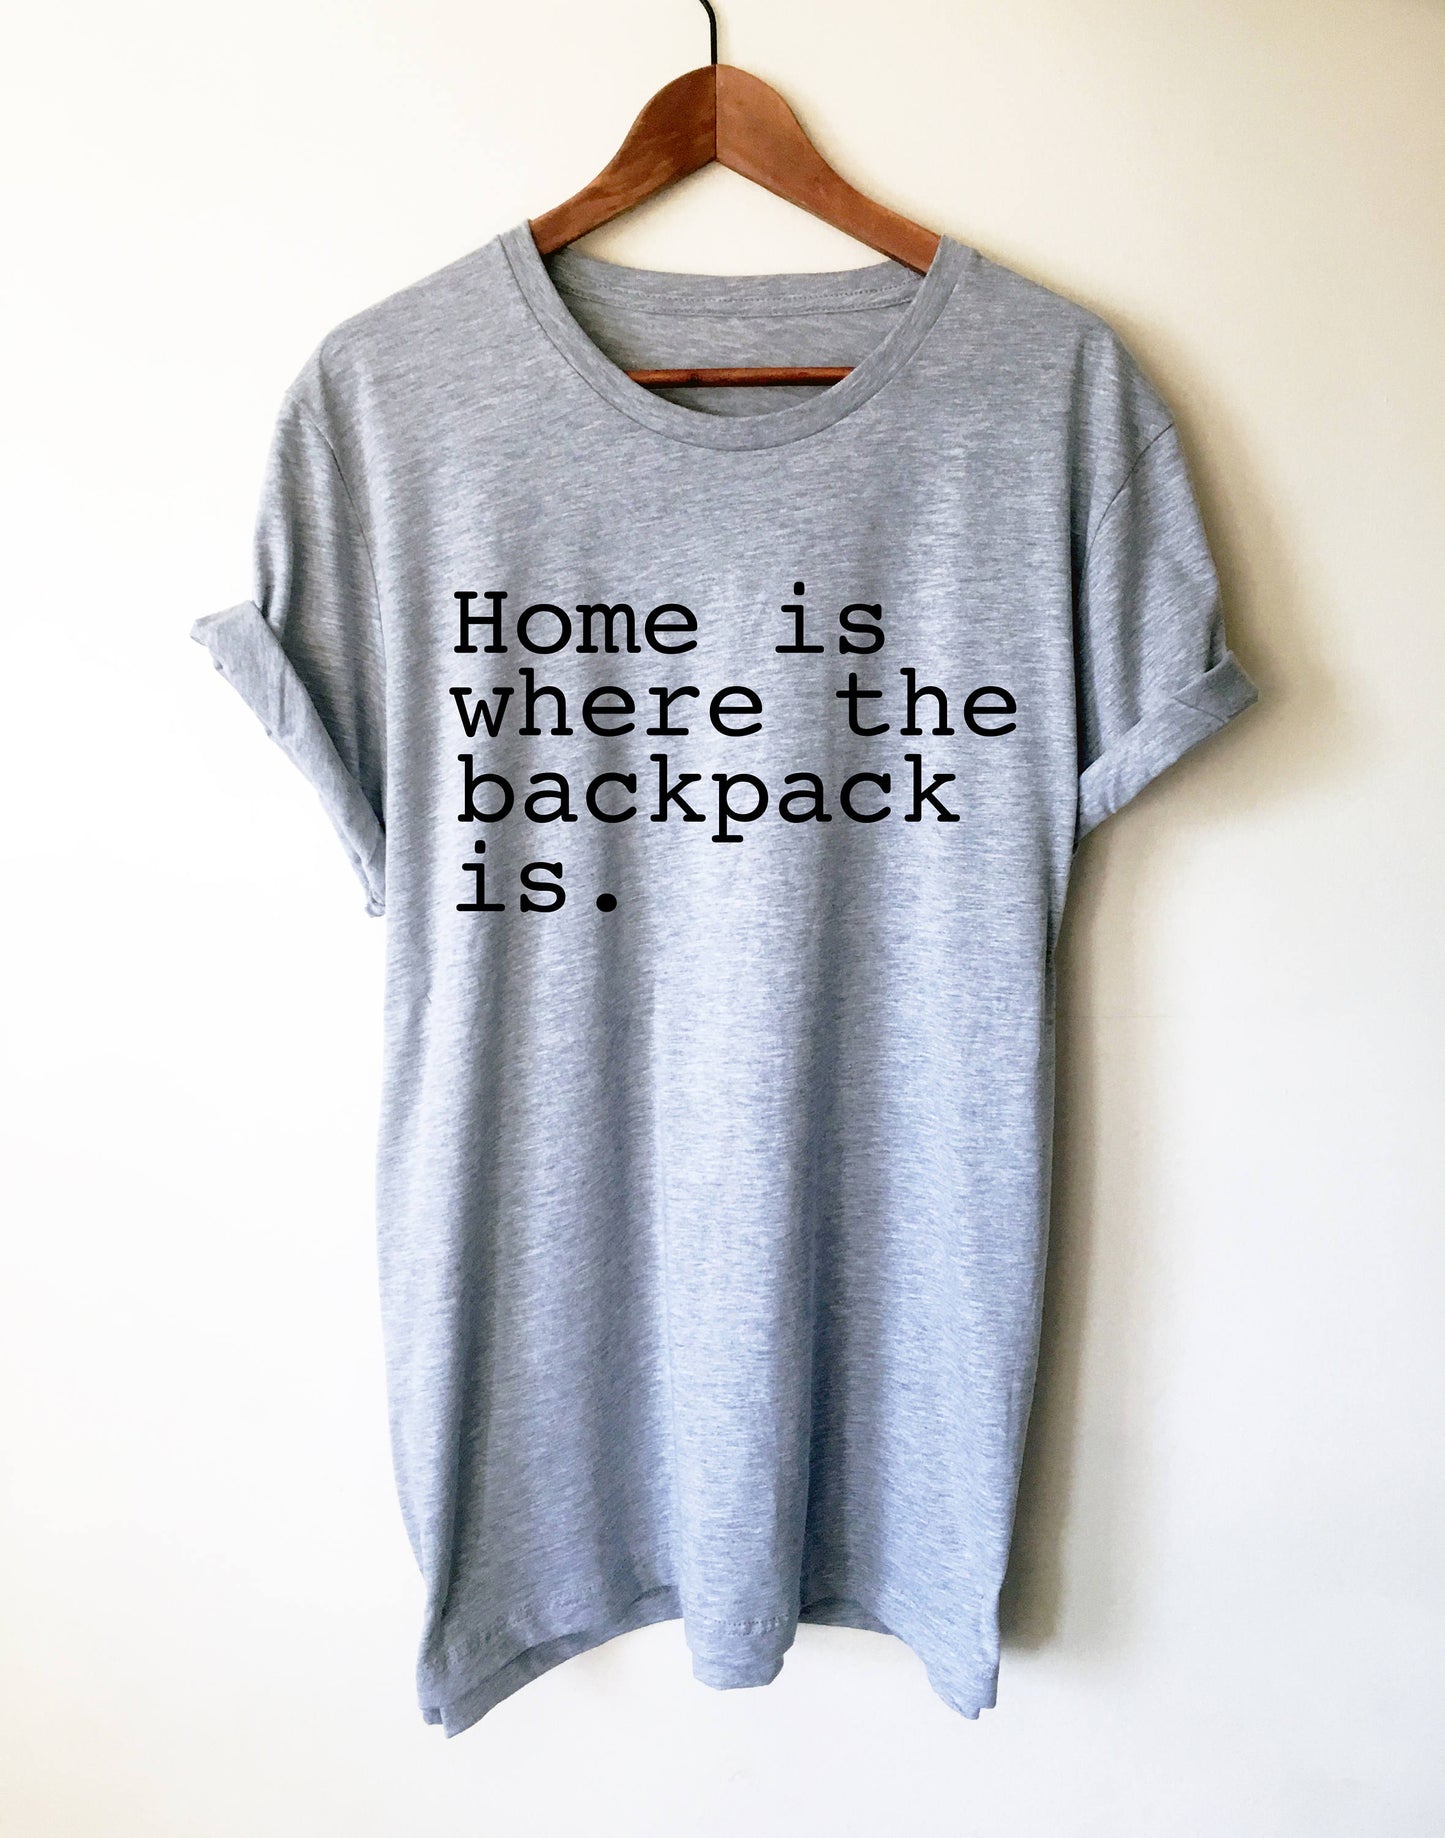 Home Is Where The Backpack Is. Unisex Shirt - Backpacking shirt | Adventure shirt | Travel shirt | World traveler shirt | Wanderlust shirt